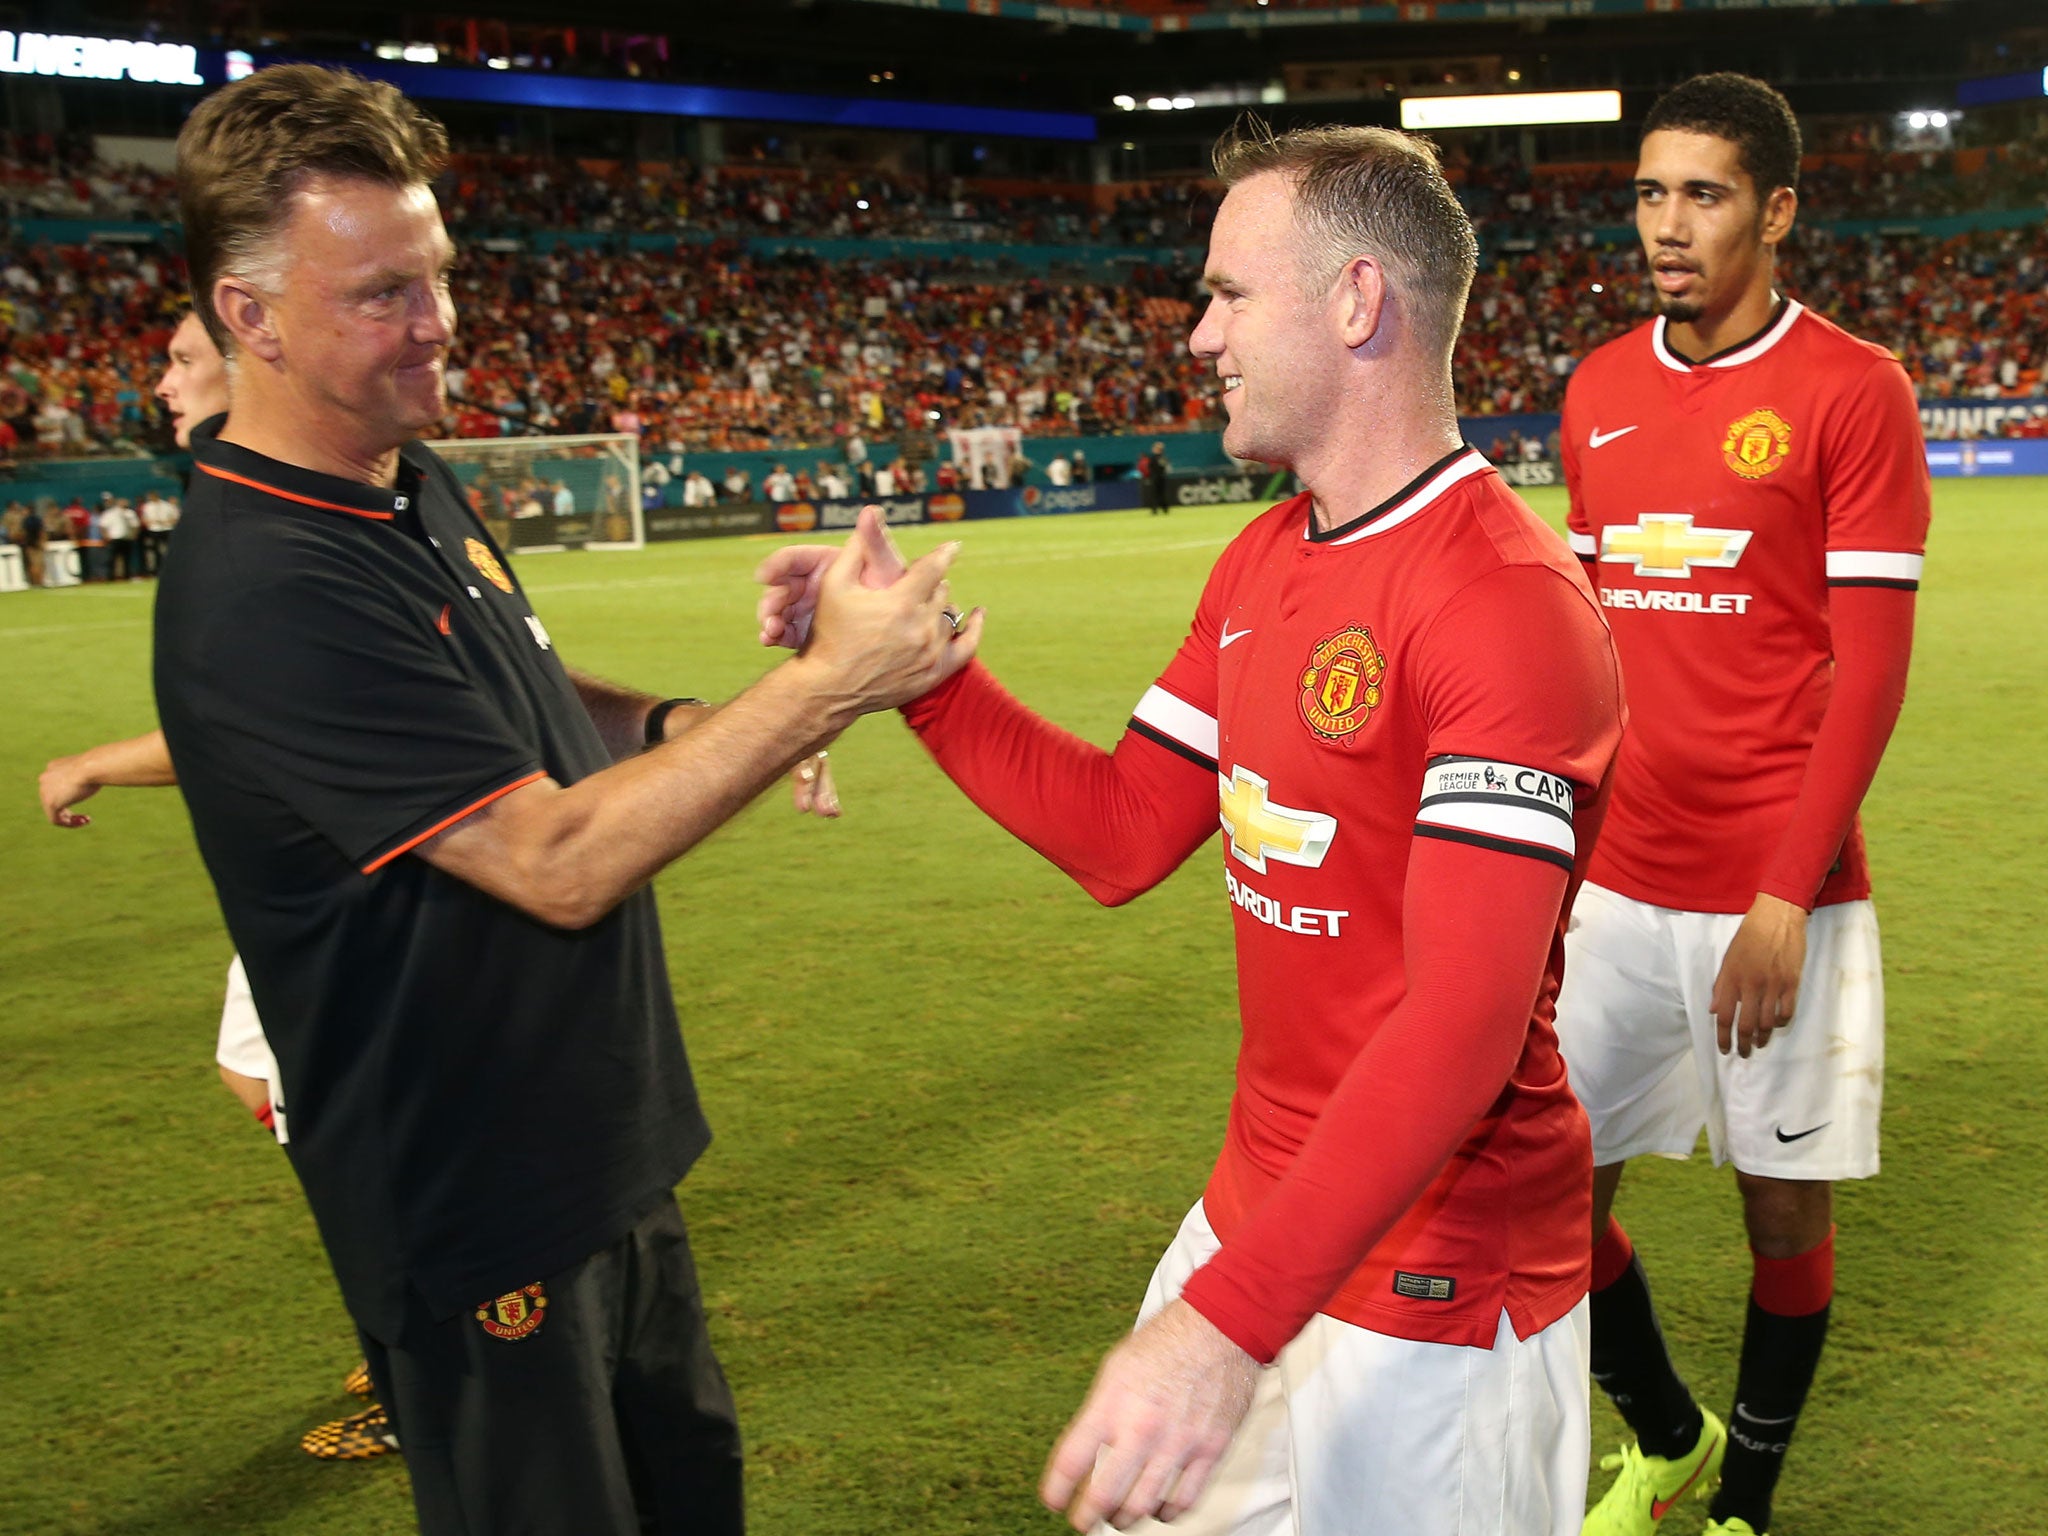 Louis van Gaal shakes Rooney's hand at full time